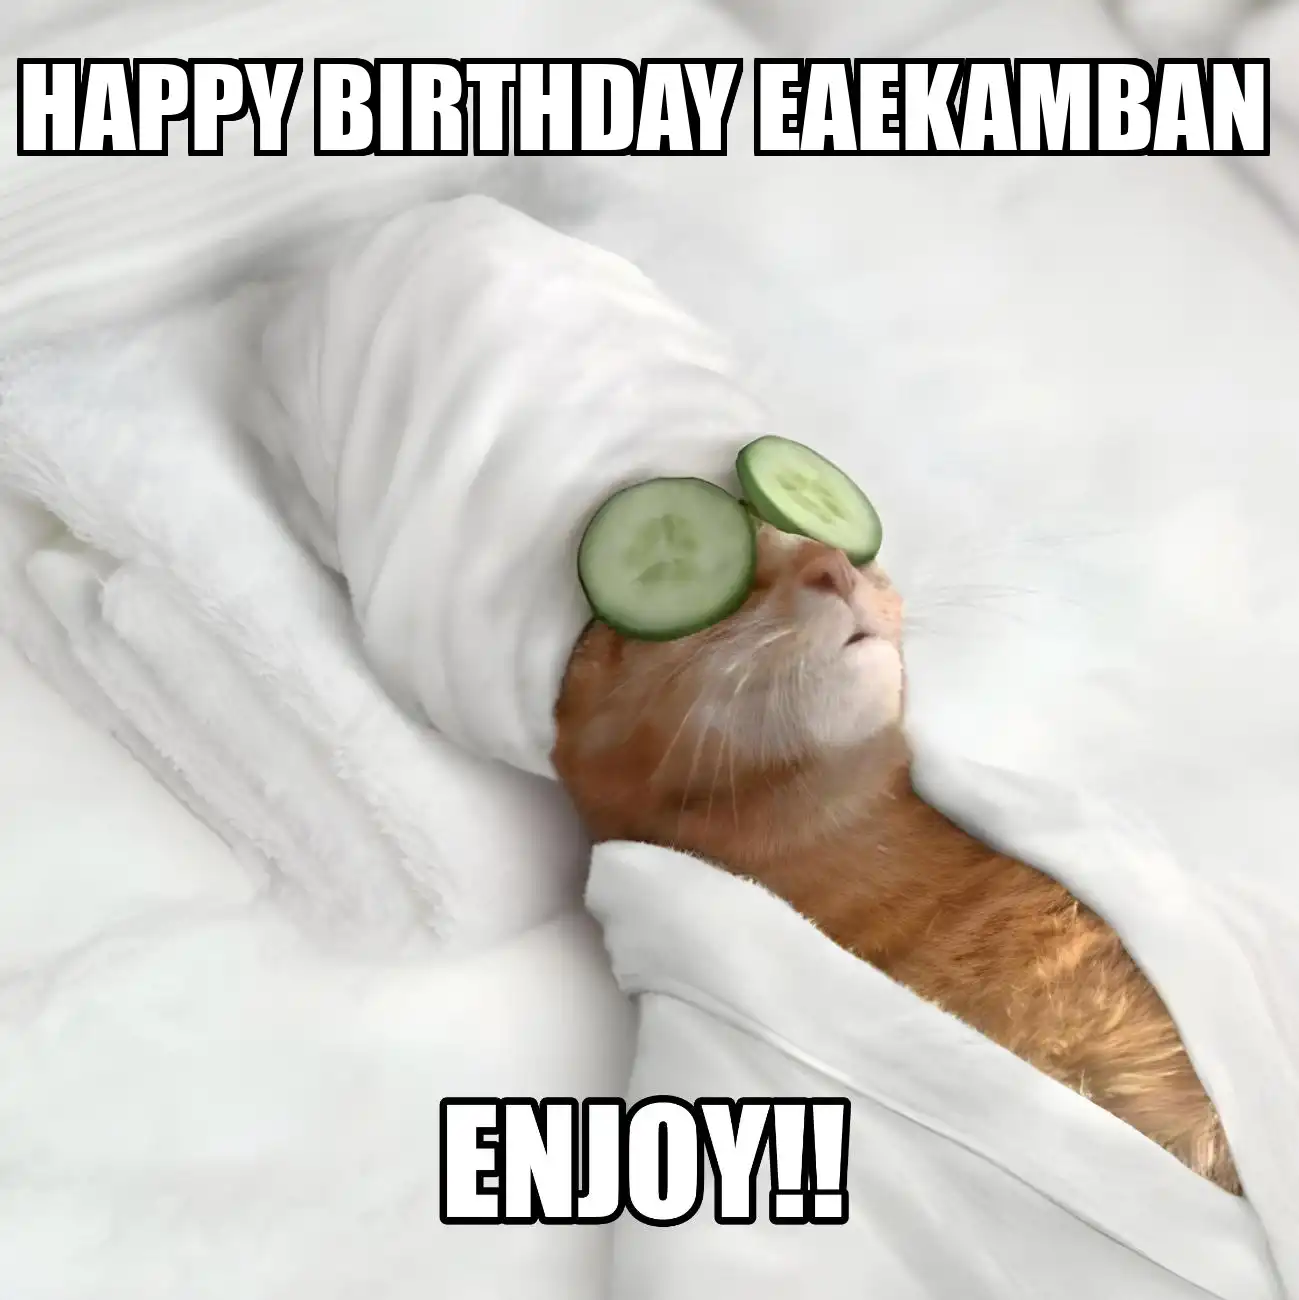 Happy Birthday Eaekamban Enjoy Cat Meme